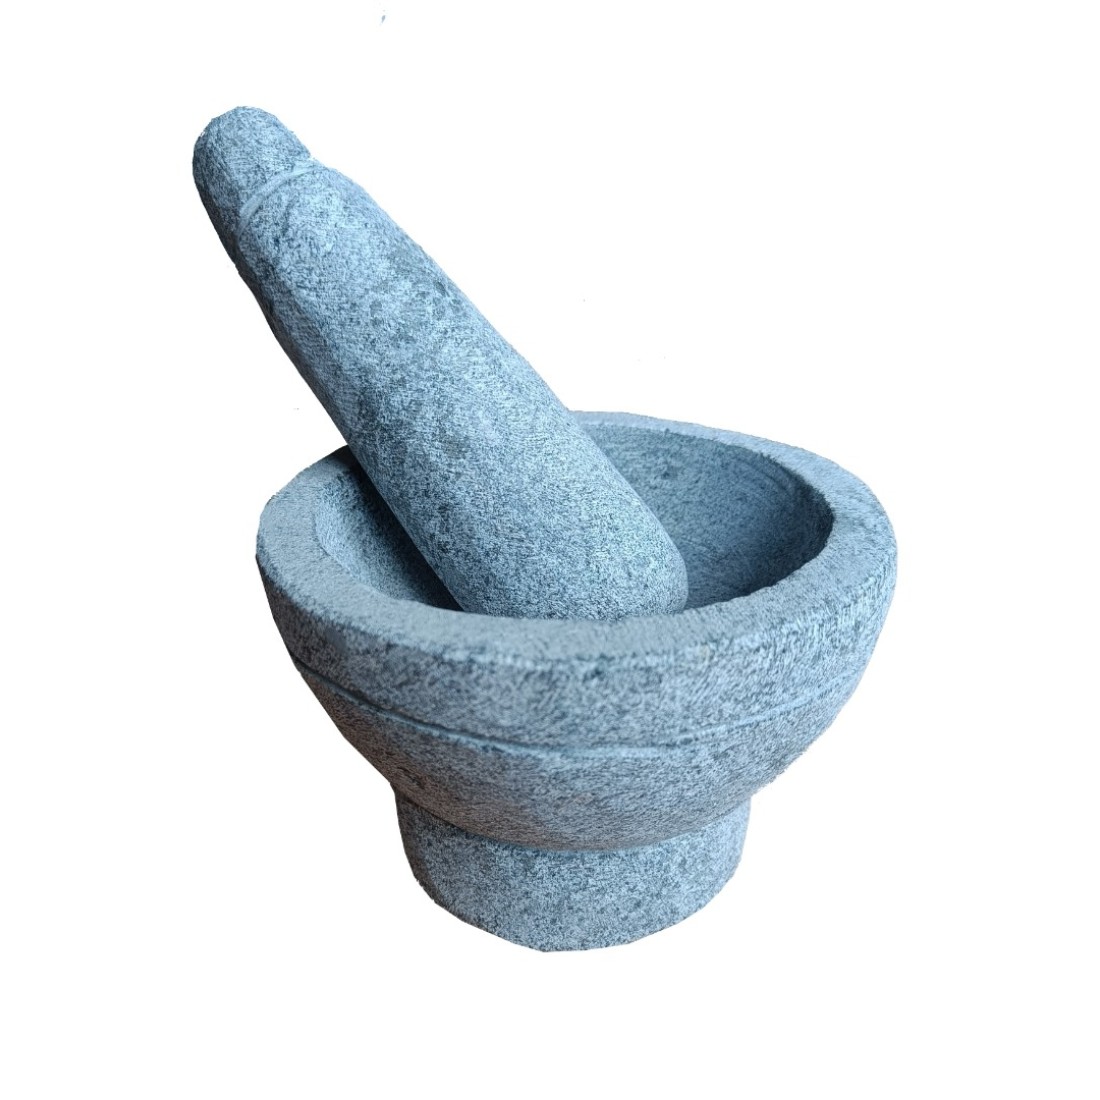 Tillage-Natural Stone Mortar and Pestle Set/Ural/Okhli Masher/idikallu set (size 6 inches) 1